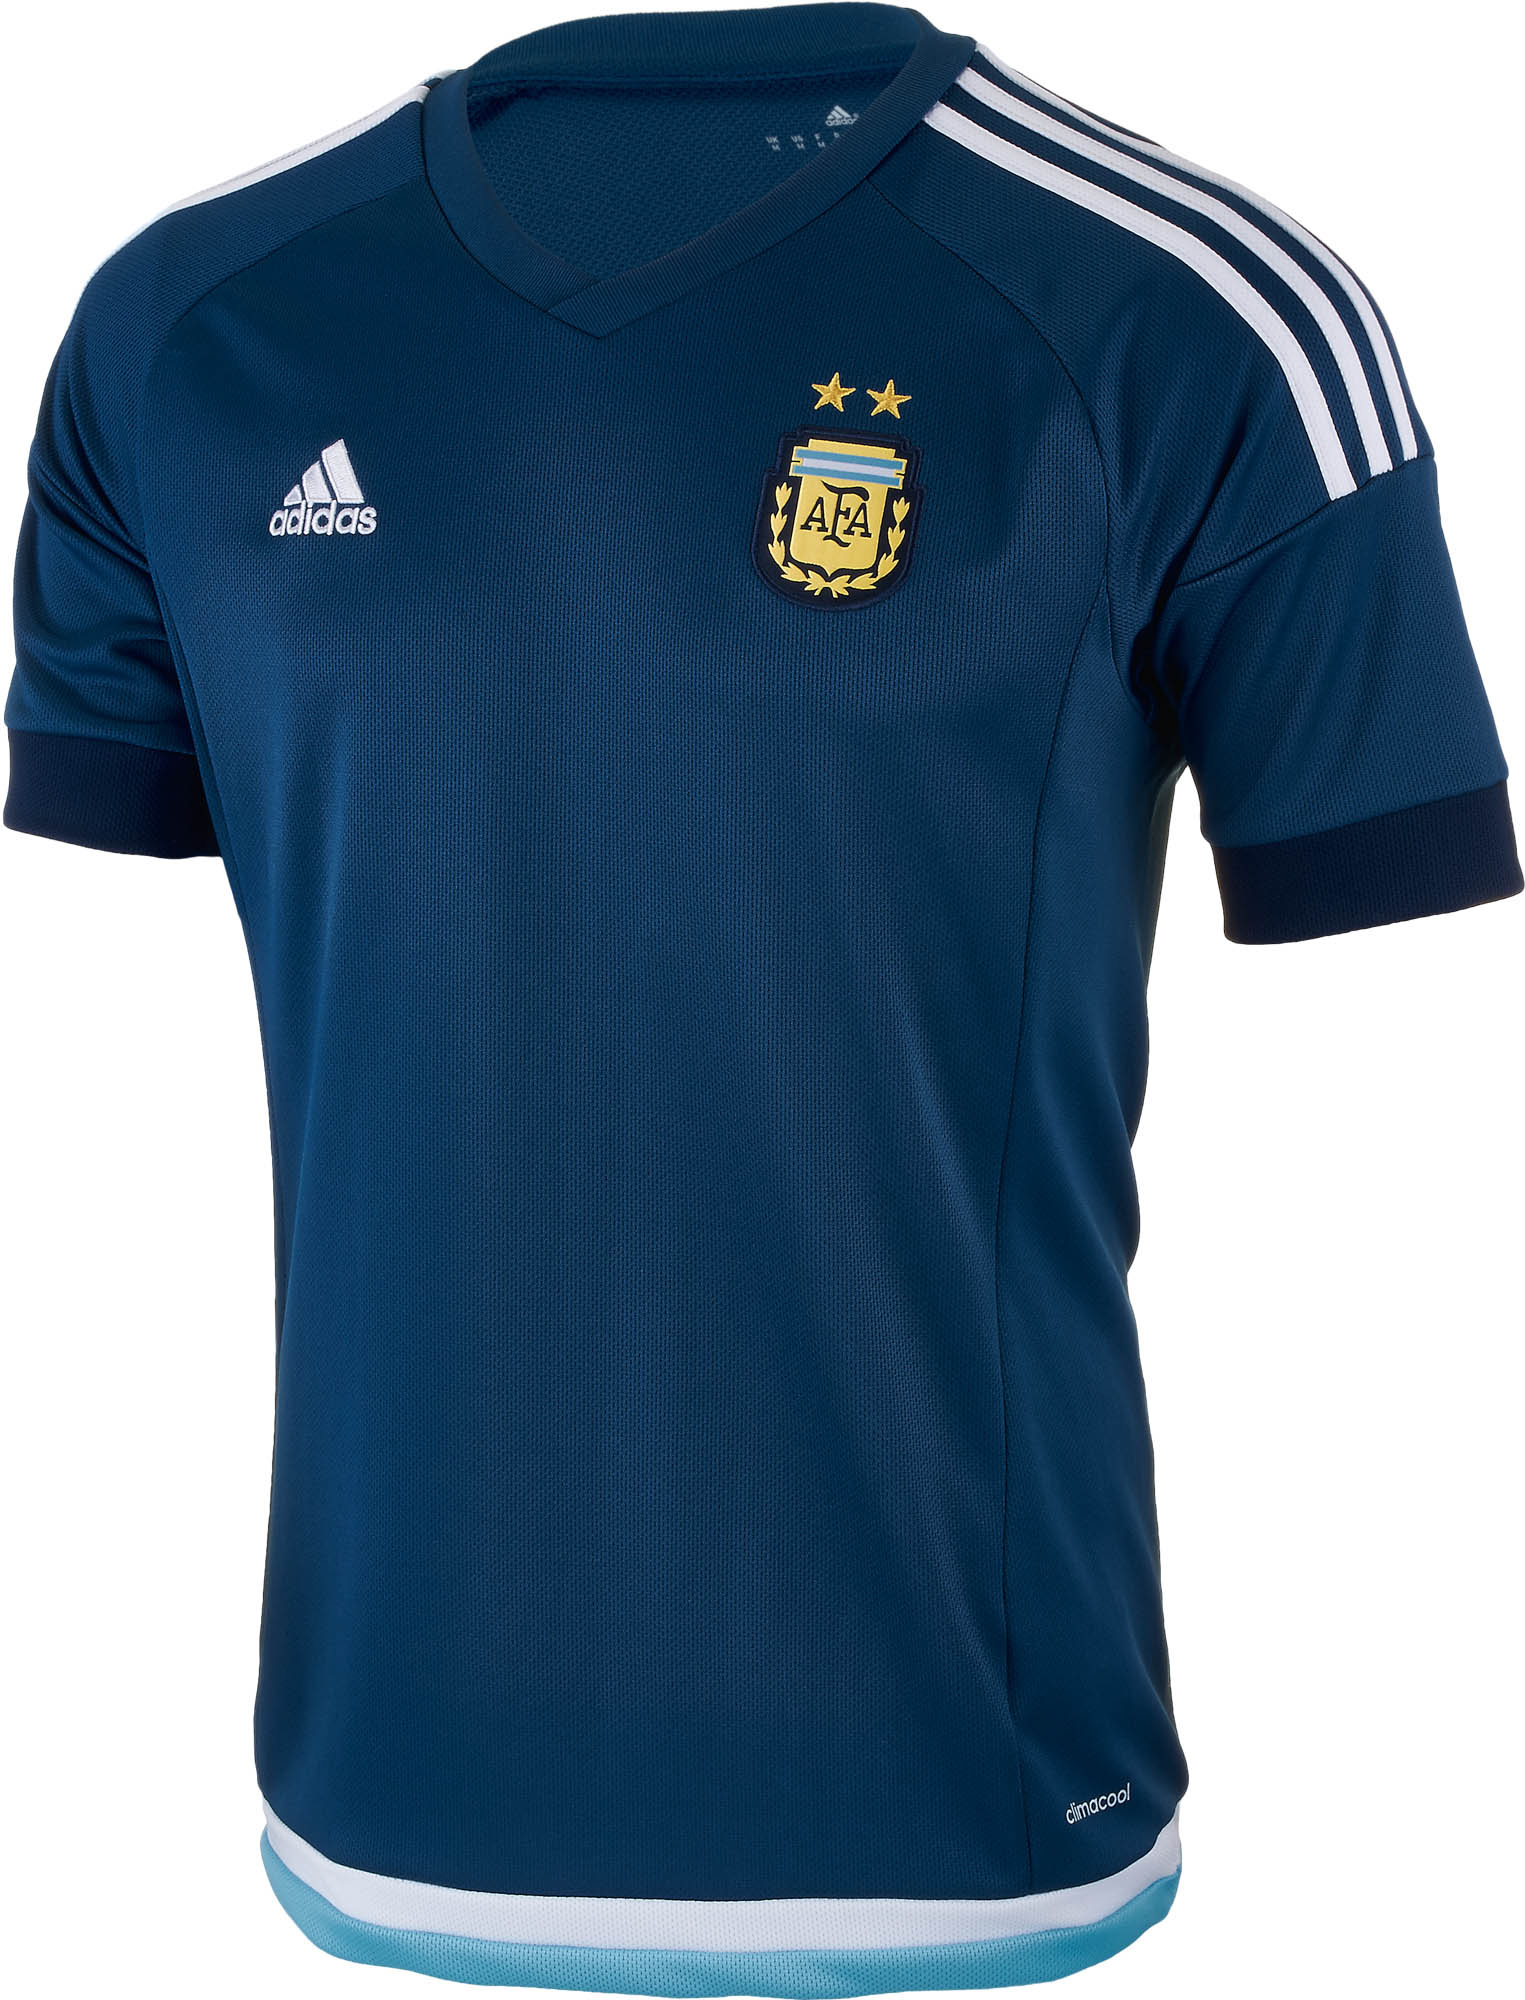 argentina practice jersey